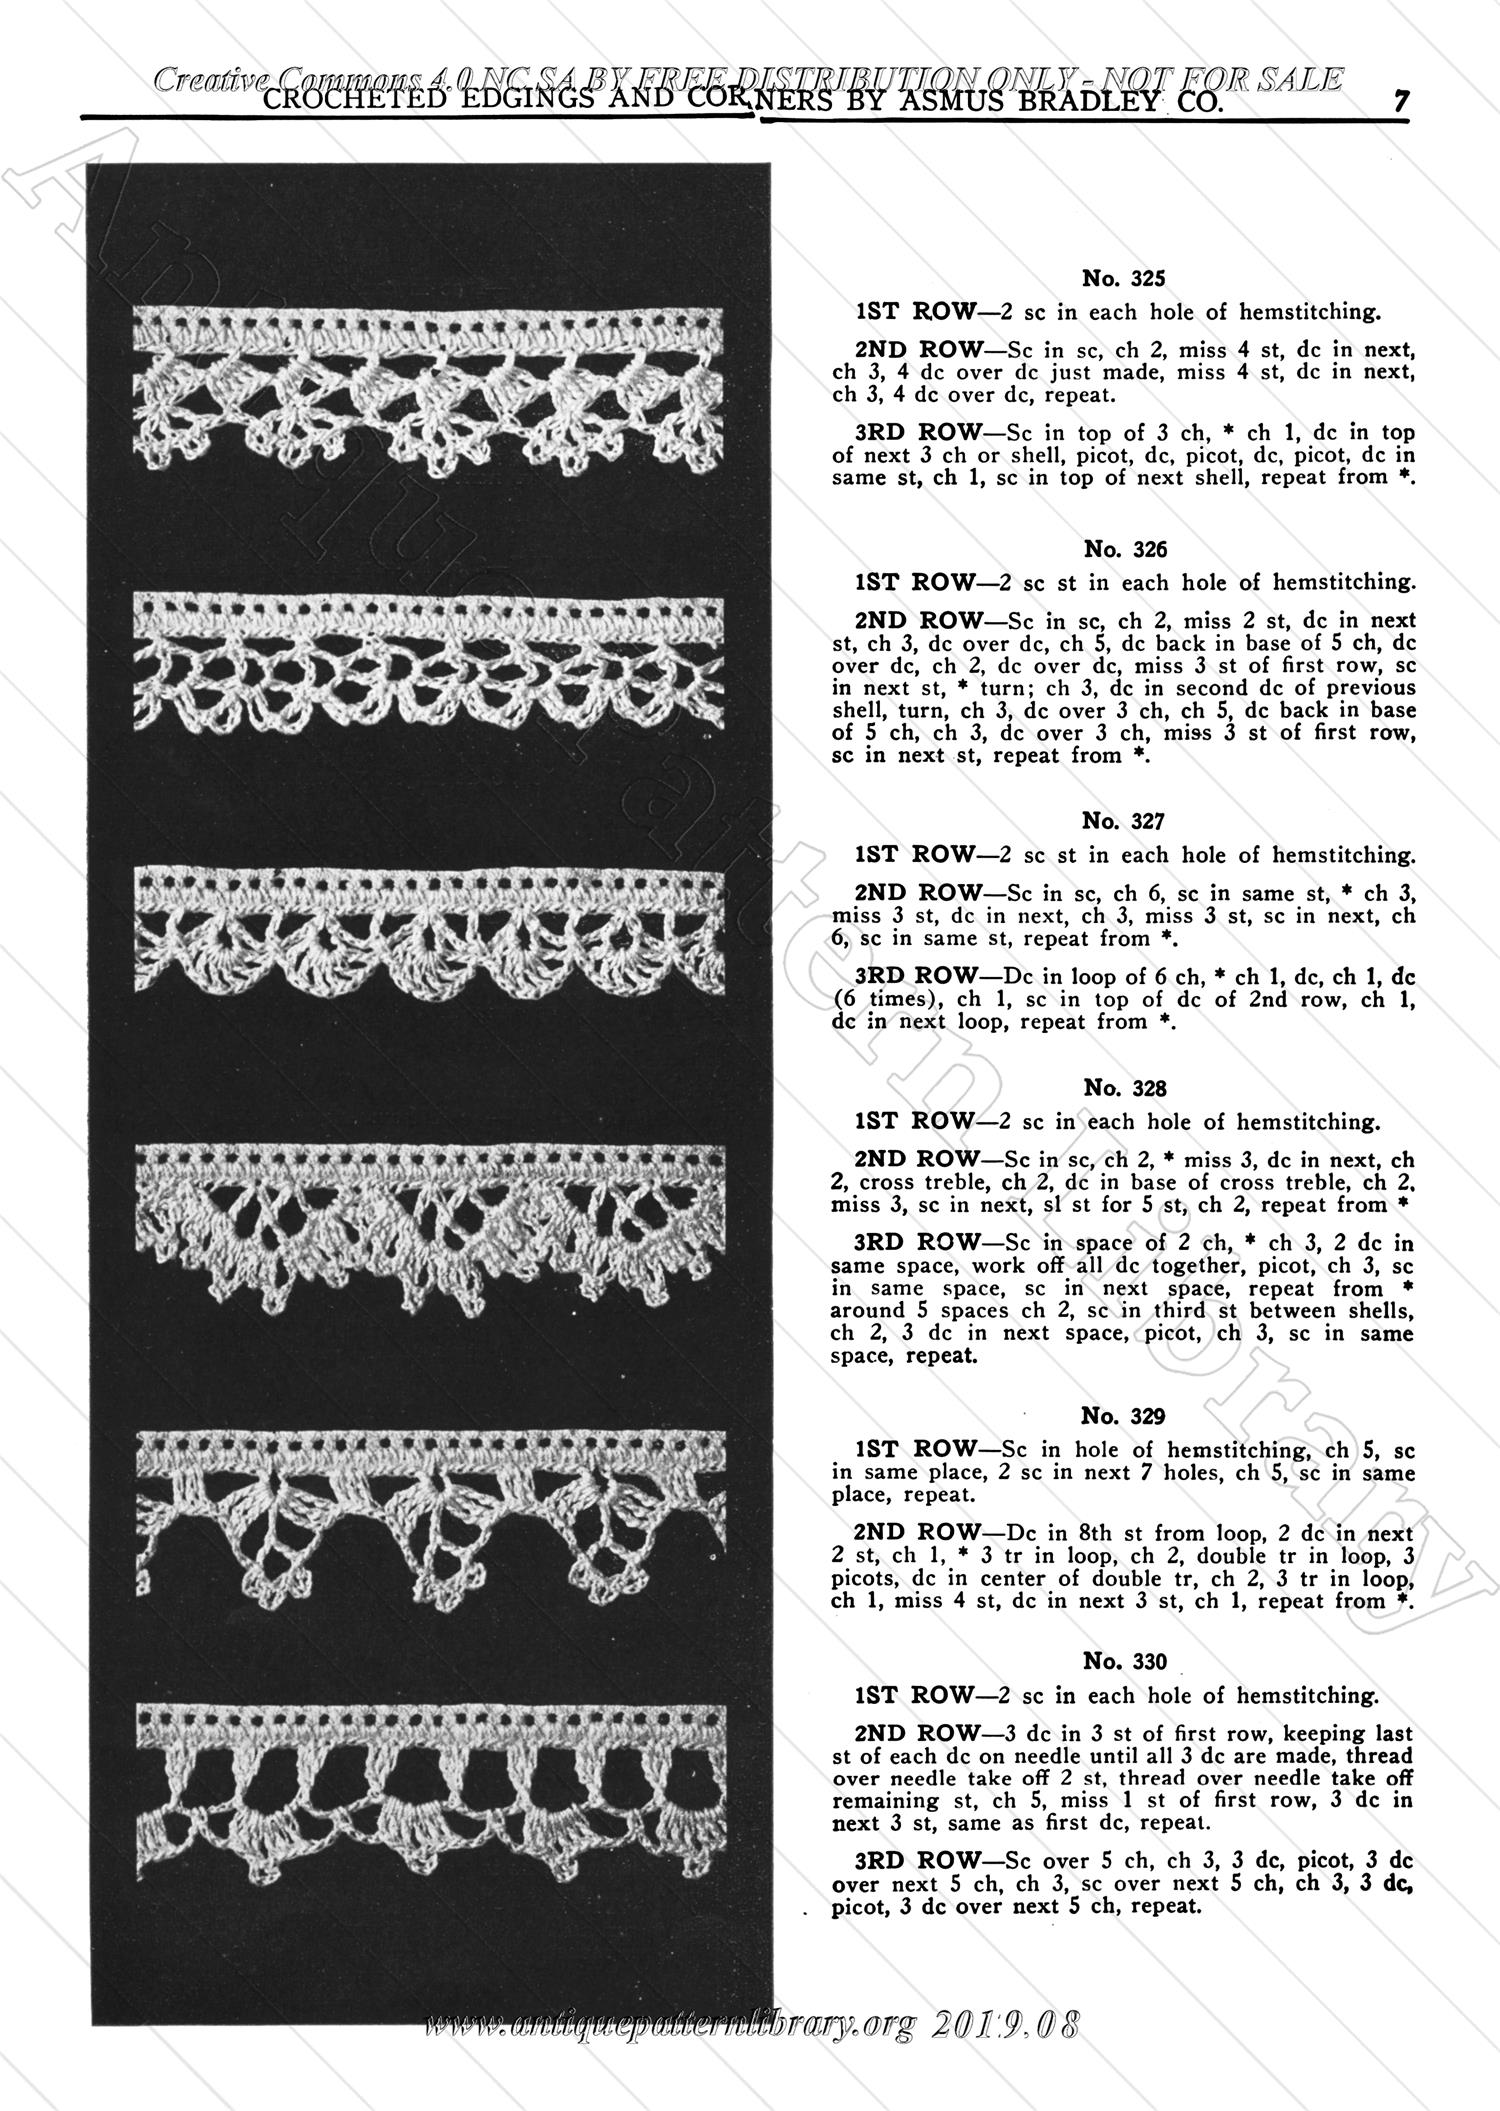 B-JA046 A B C Book of Crocheted Edges and Corners, No. 2